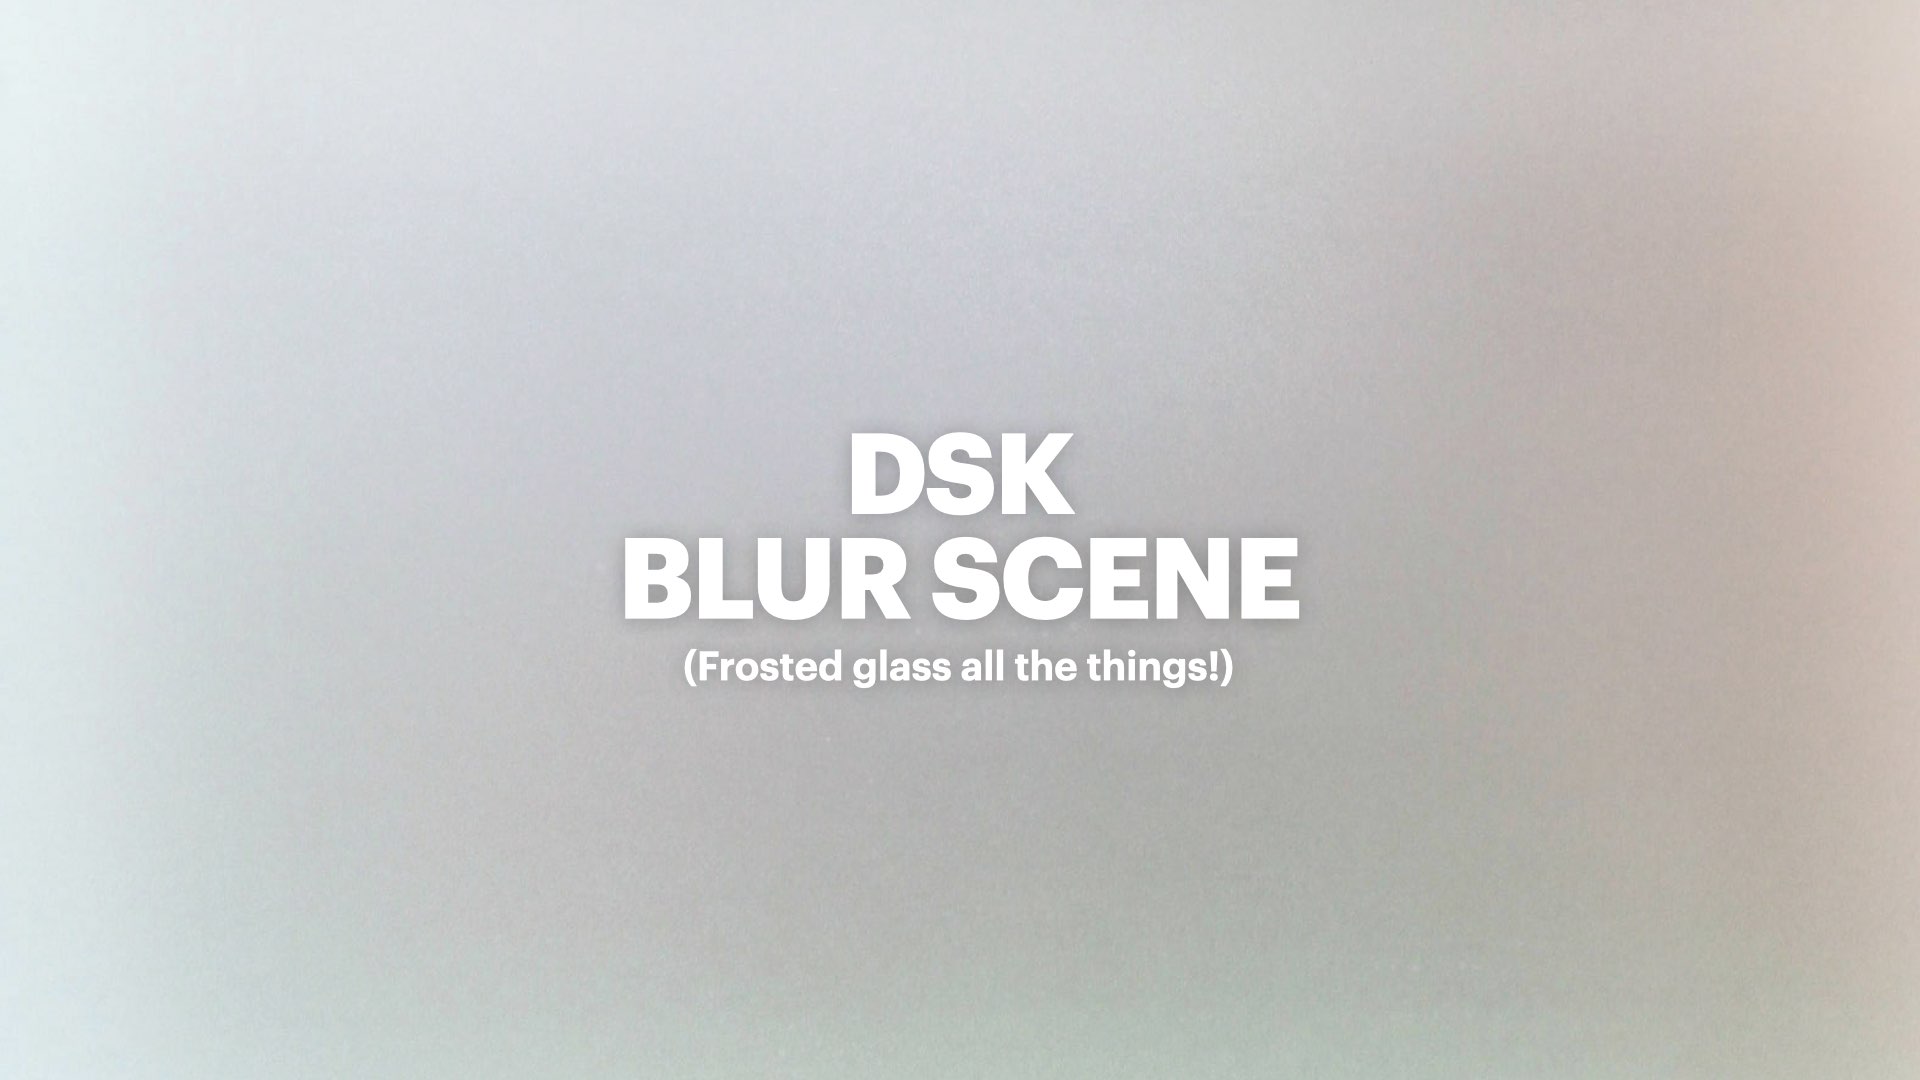 DSK Blur Scene